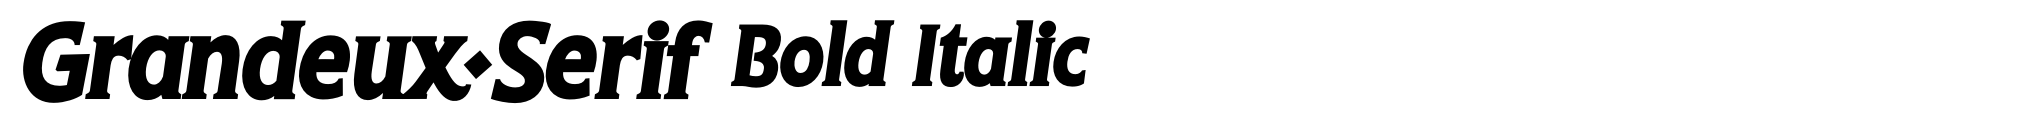 Grandeux Serif Bold Italic image